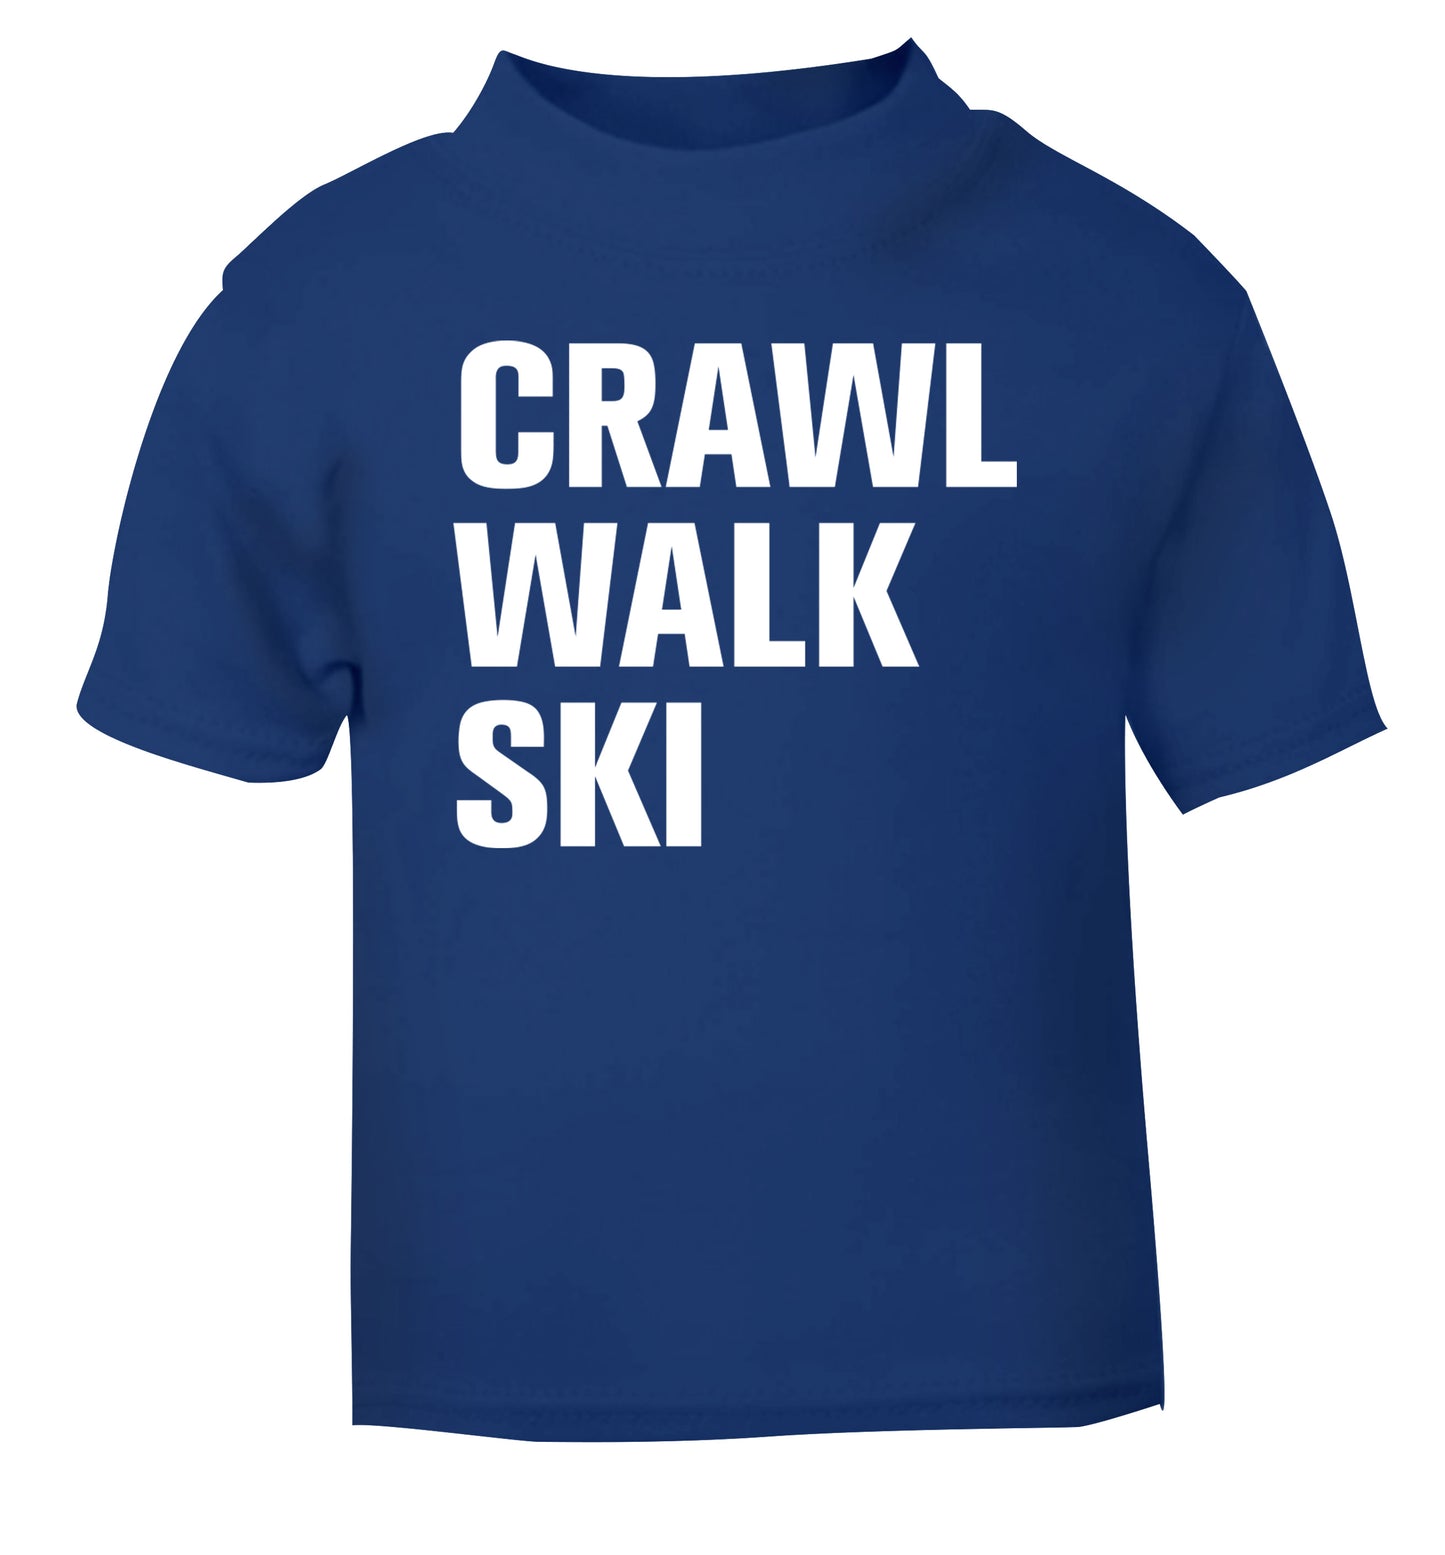 Crawl walk ski blue Baby Toddler Tshirt 2 Years